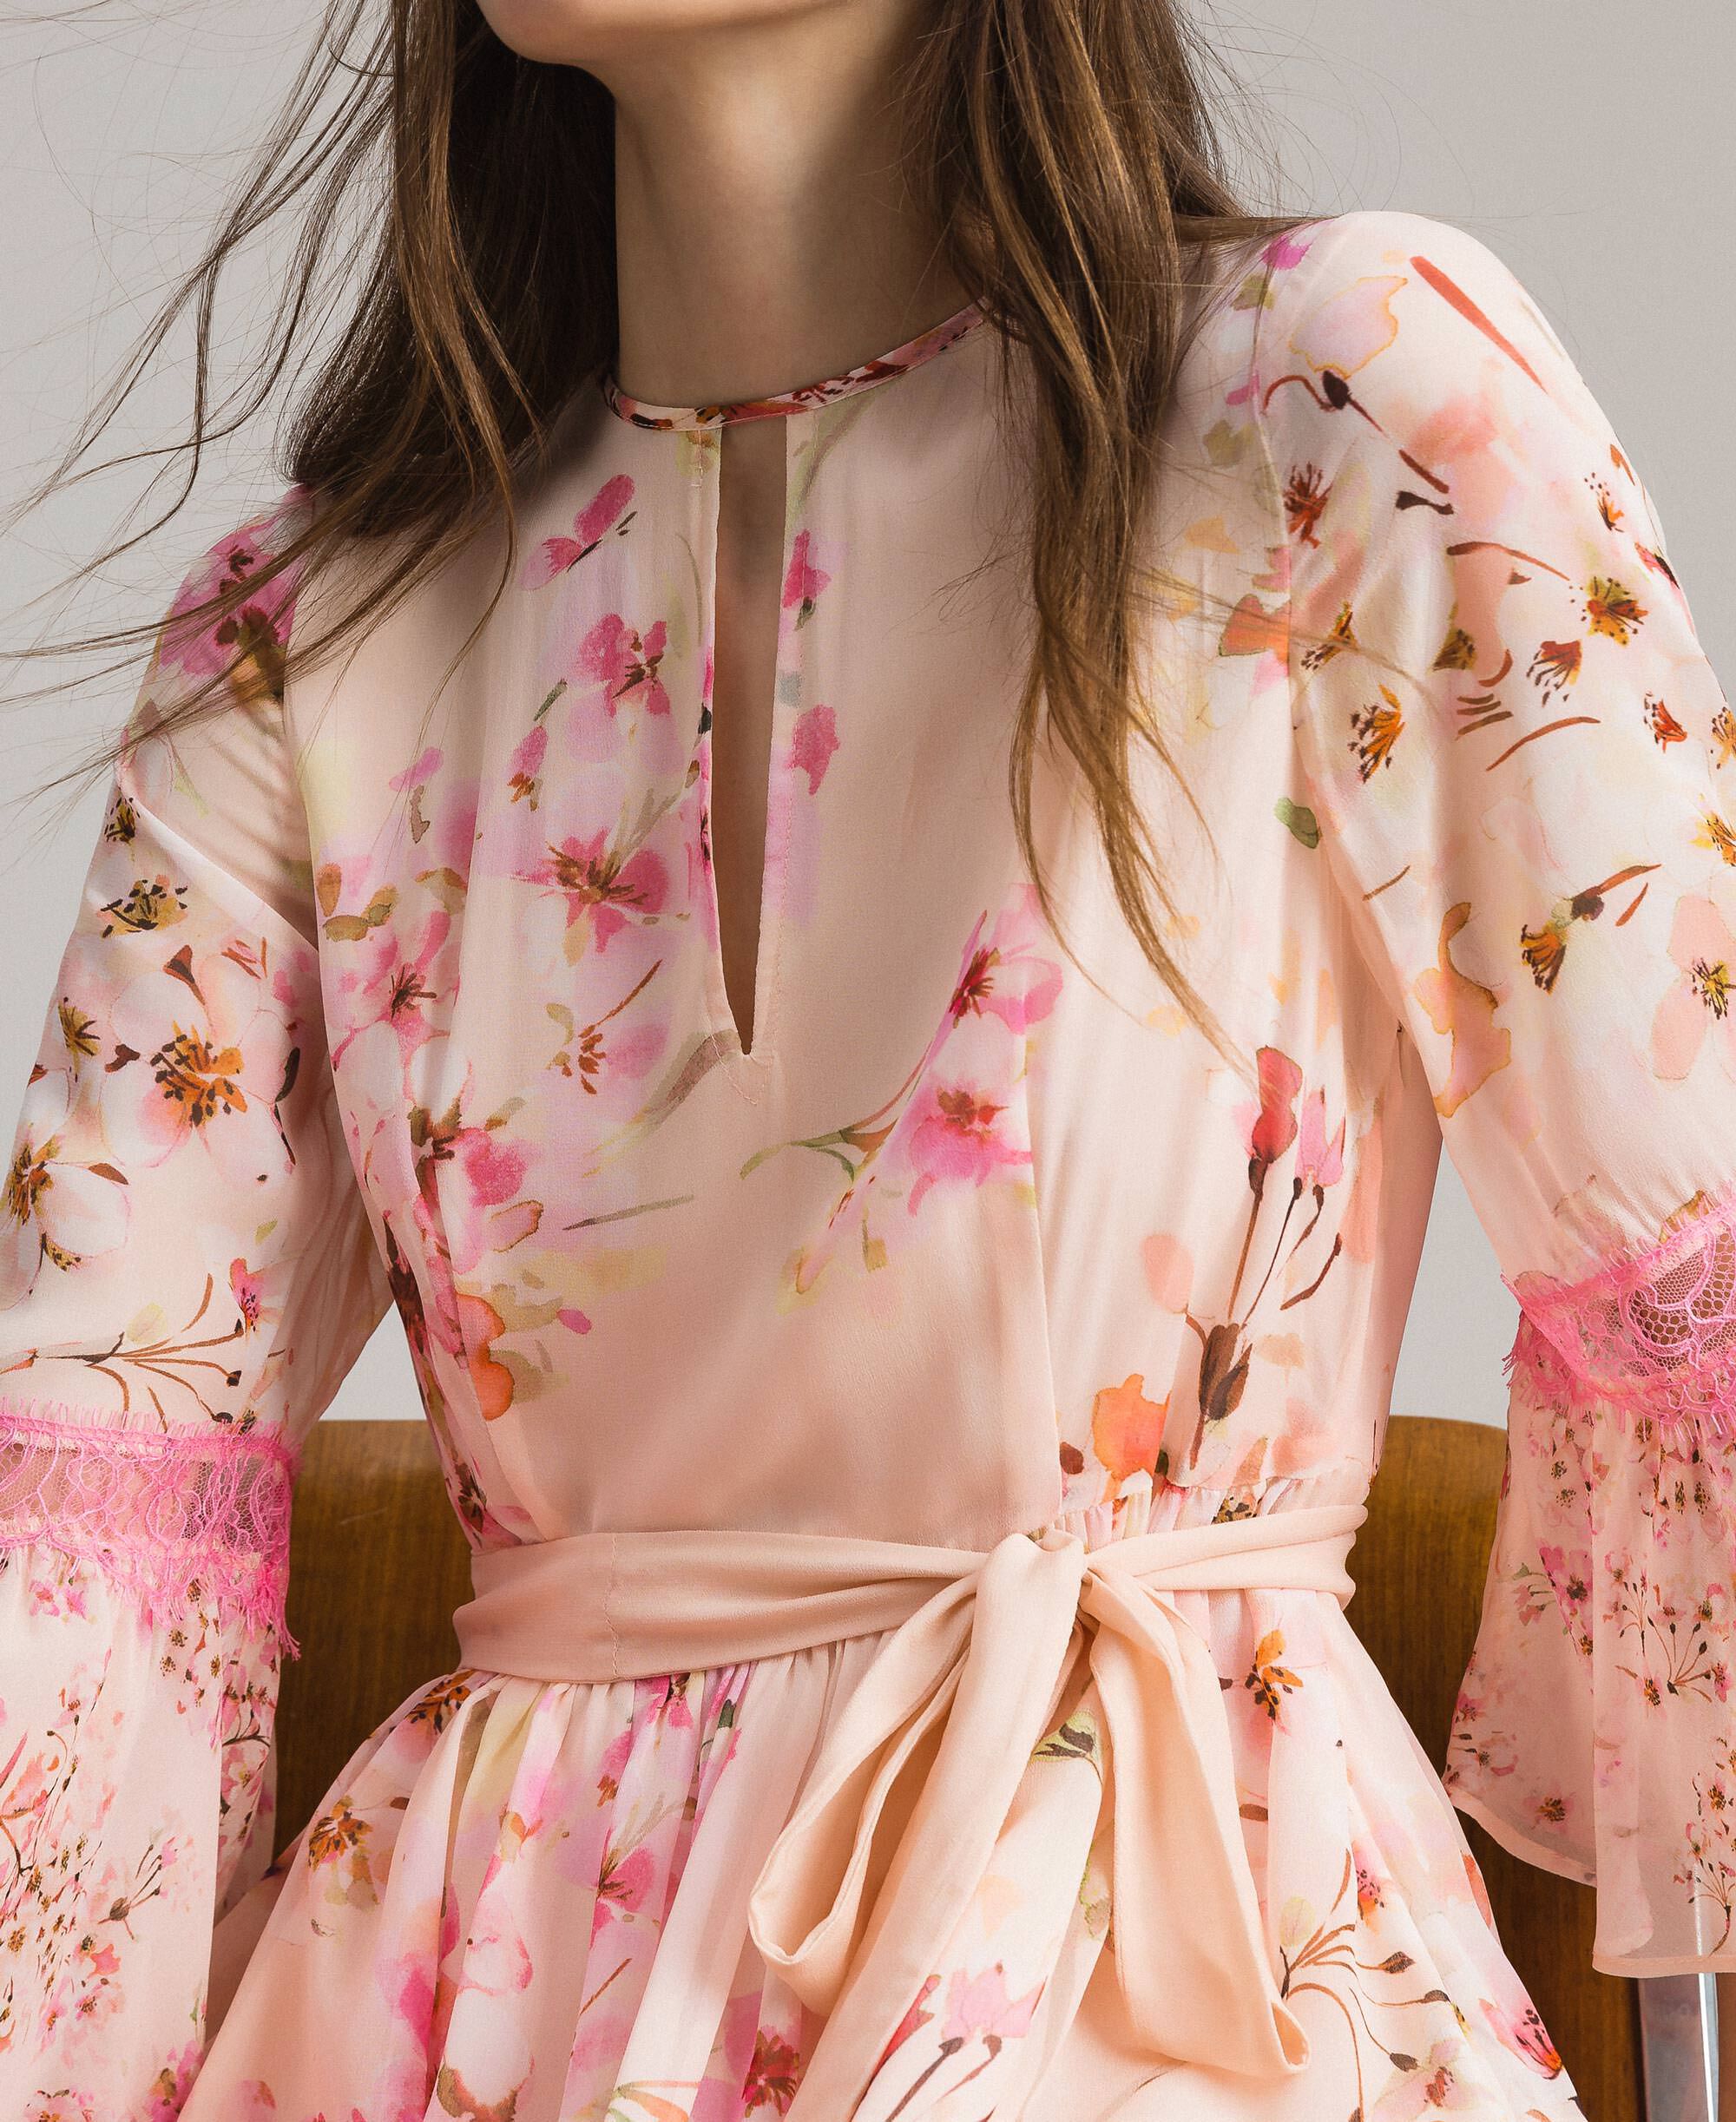 Floral print georgette dress